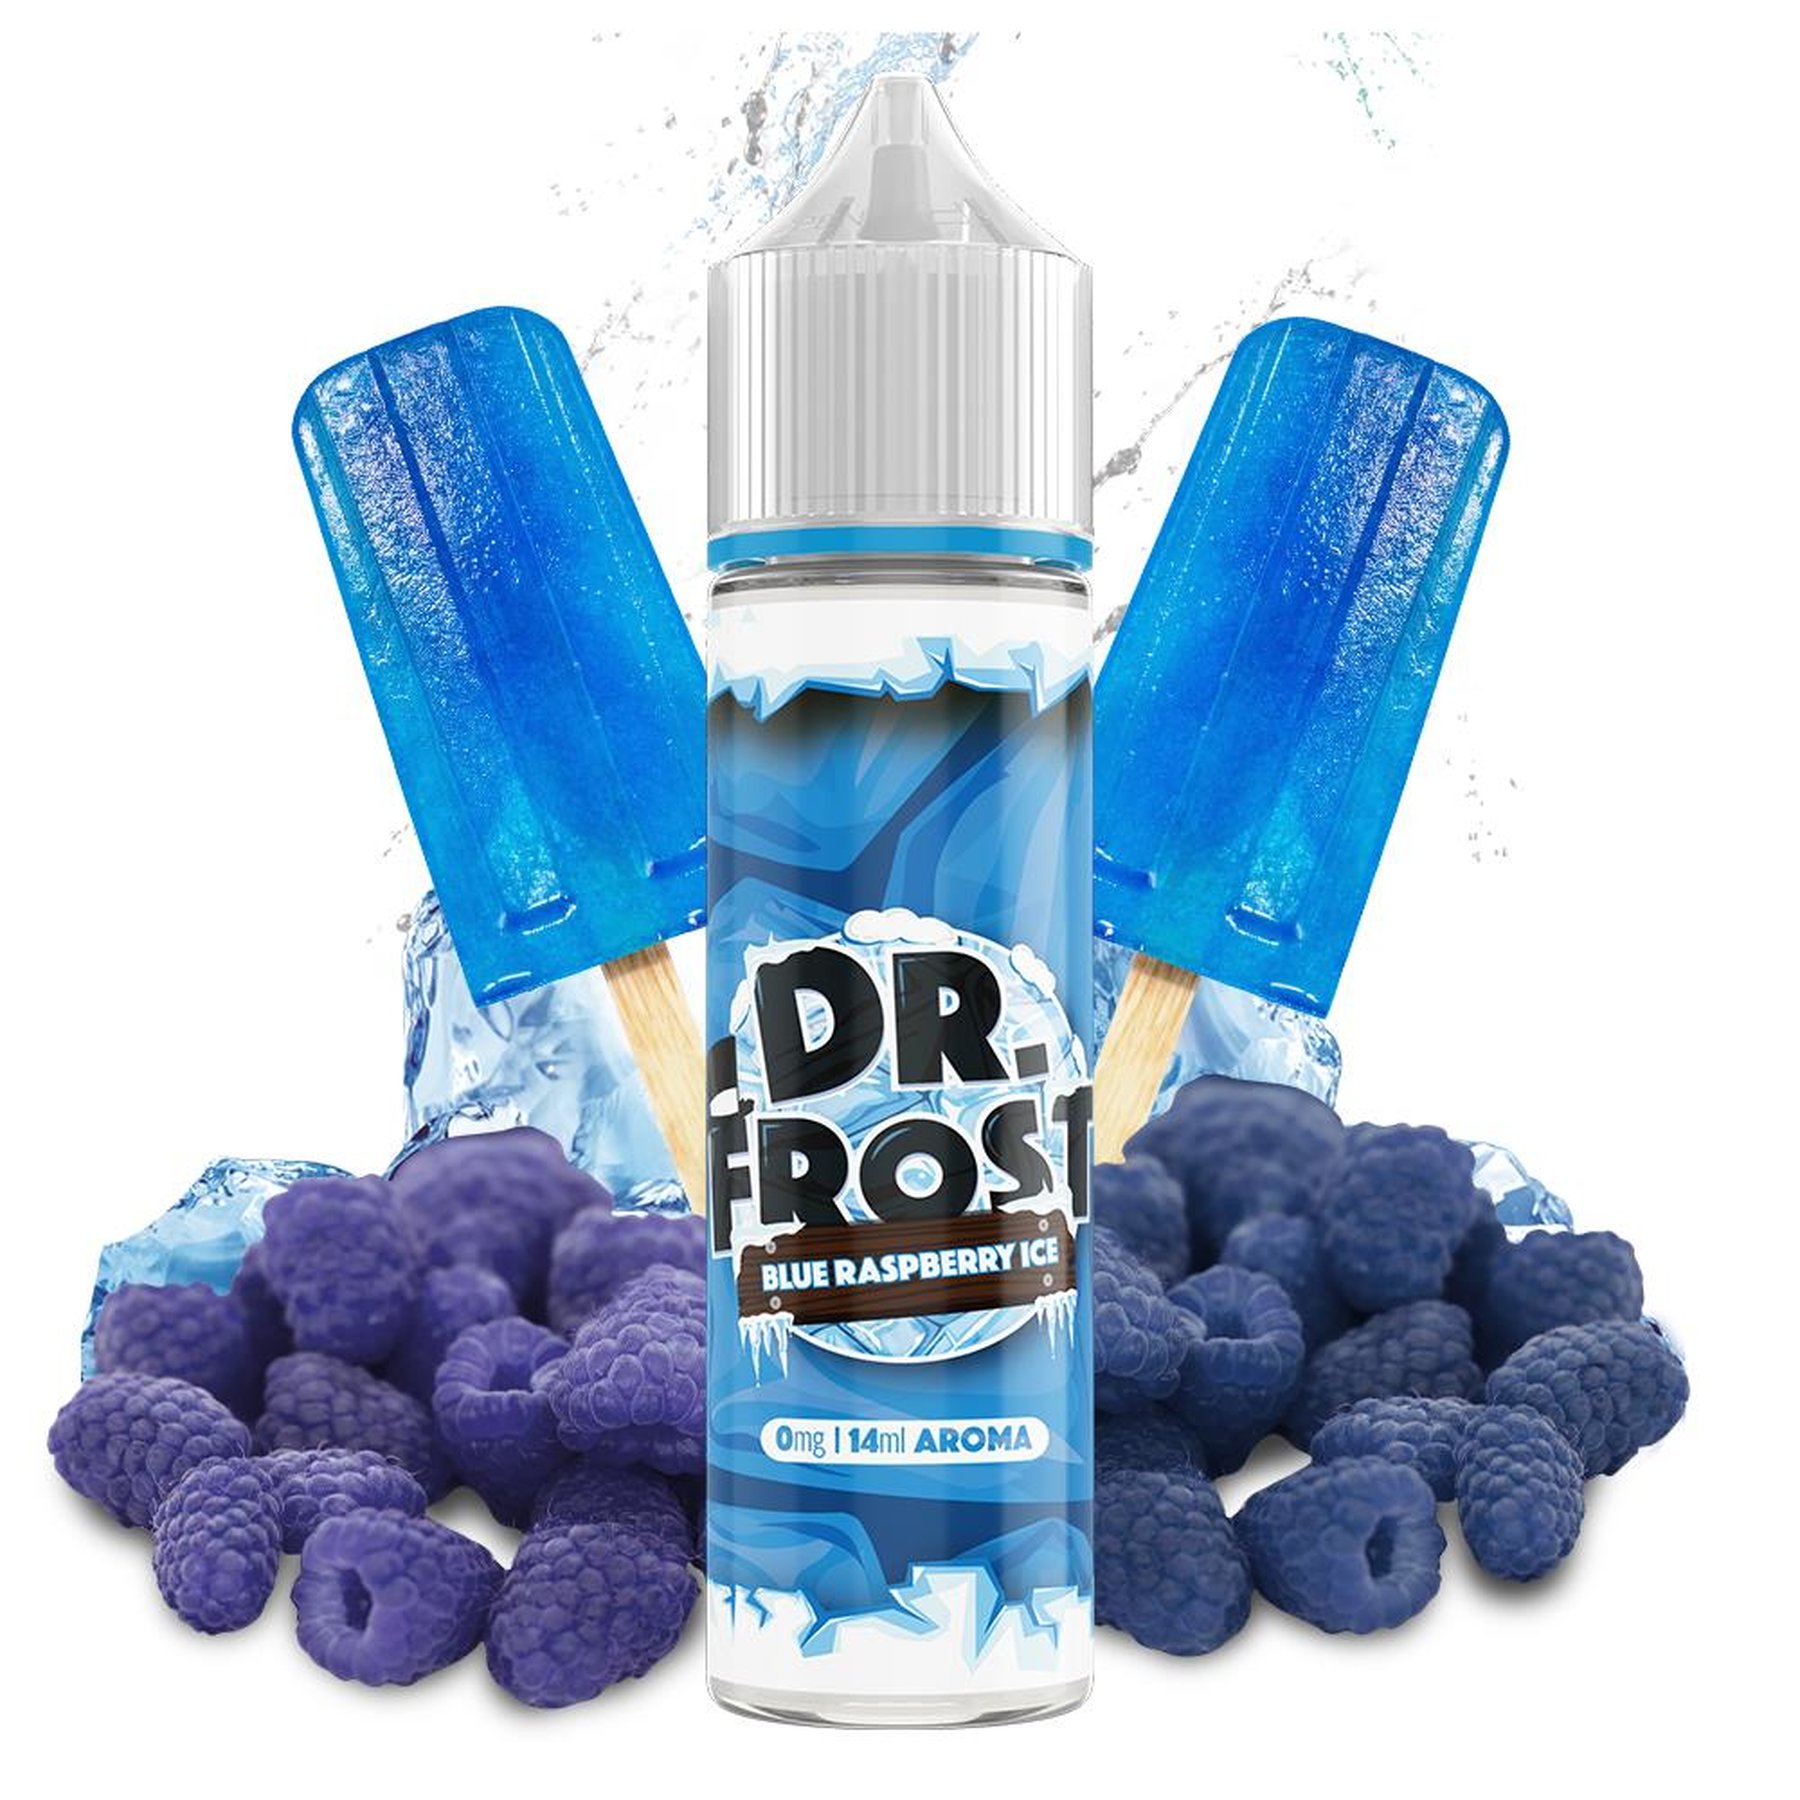 Dr. Frost Blue Raspberry Ice Longfill 14ml